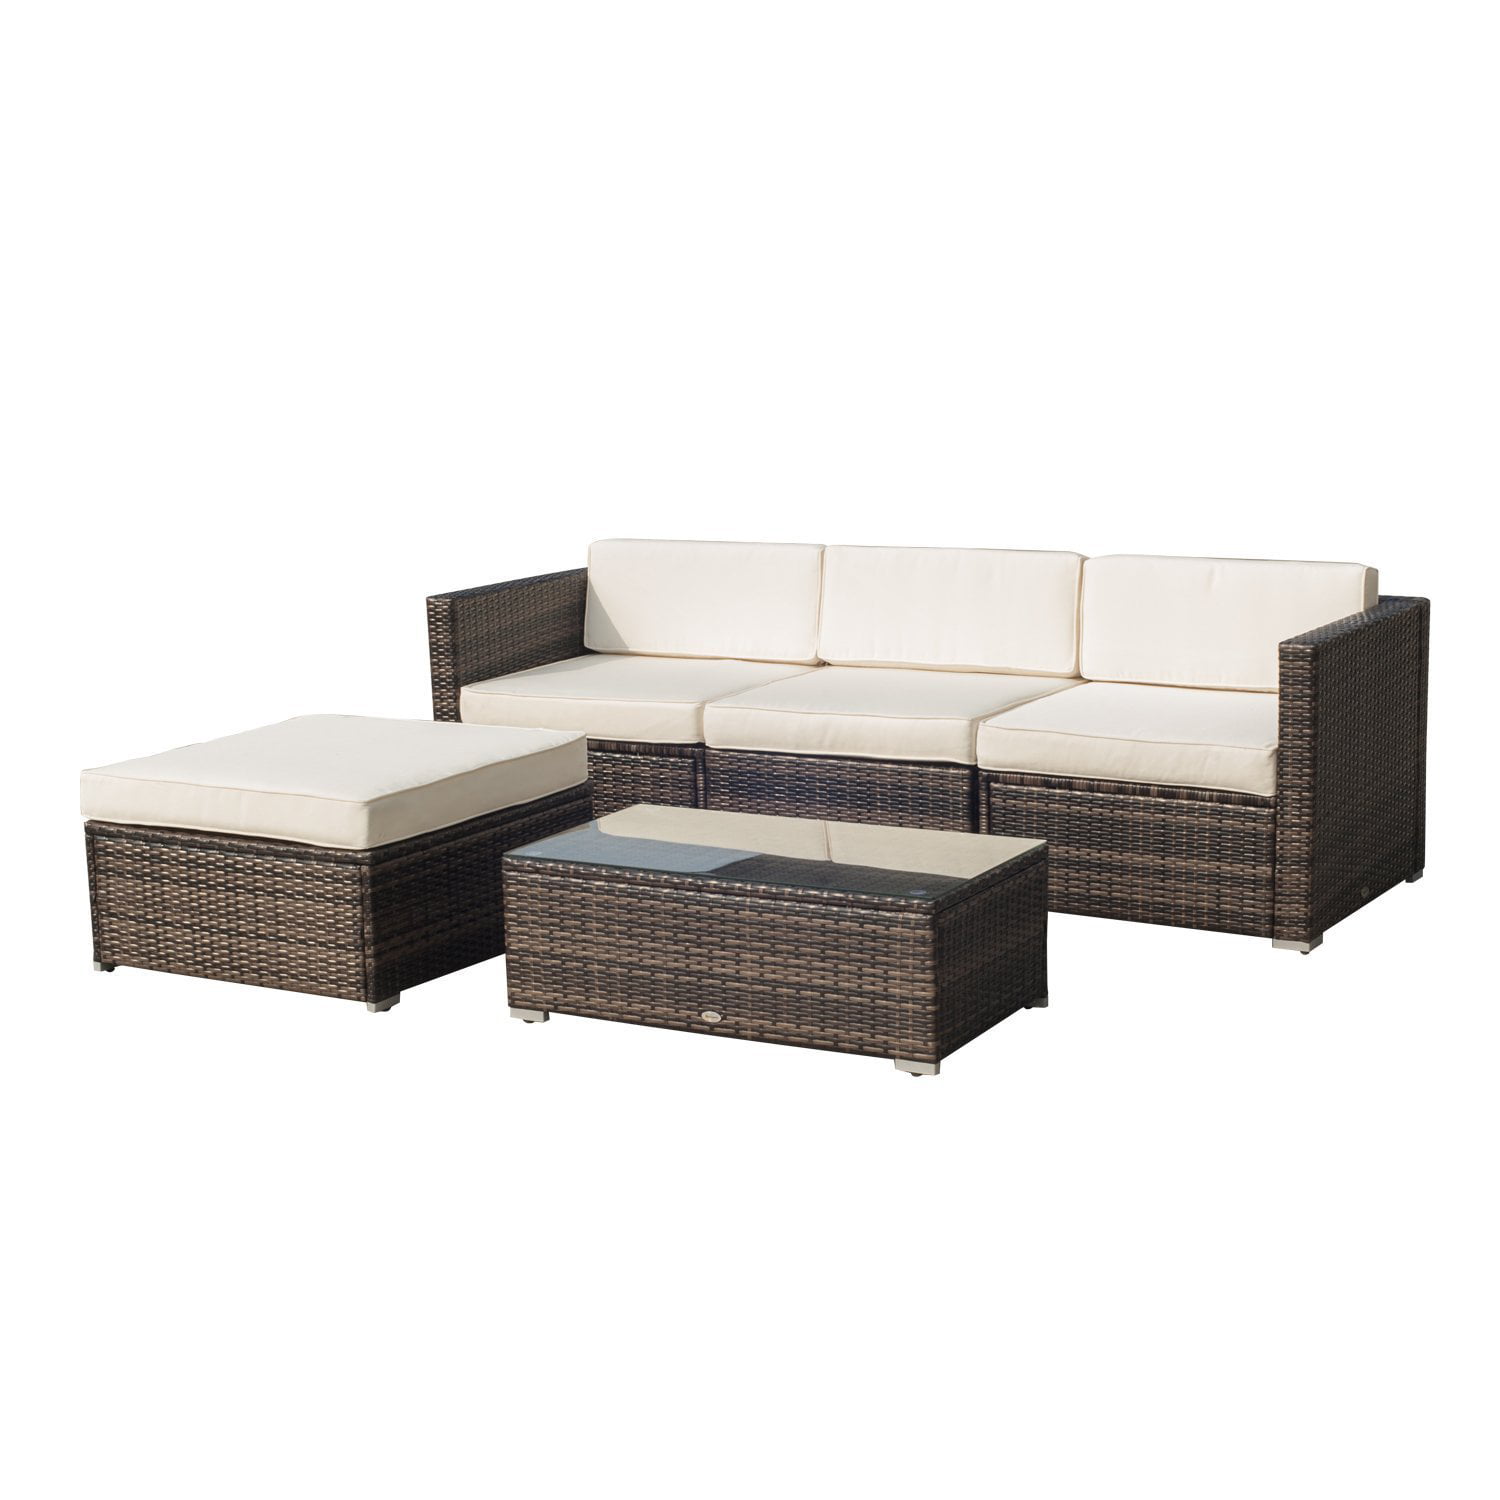 5pc Outdoor Modular Rattan Wicker Sofa, Sectional Patio Sets Canada